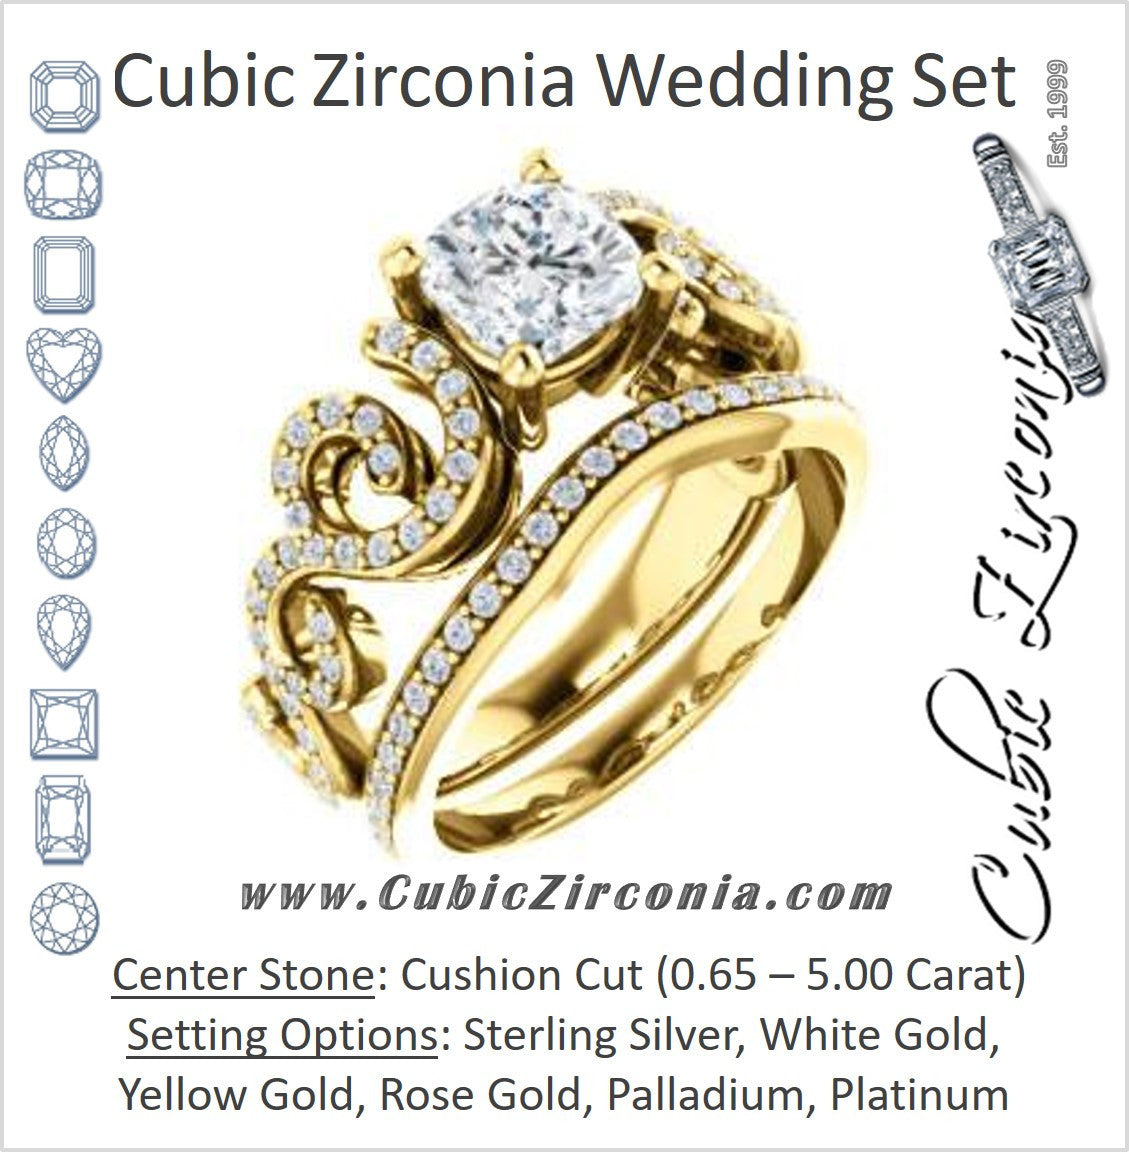 CZ Wedding Set, featuring The Carla engagement ring (Customizable Cushion Cut Split-Band Curves)